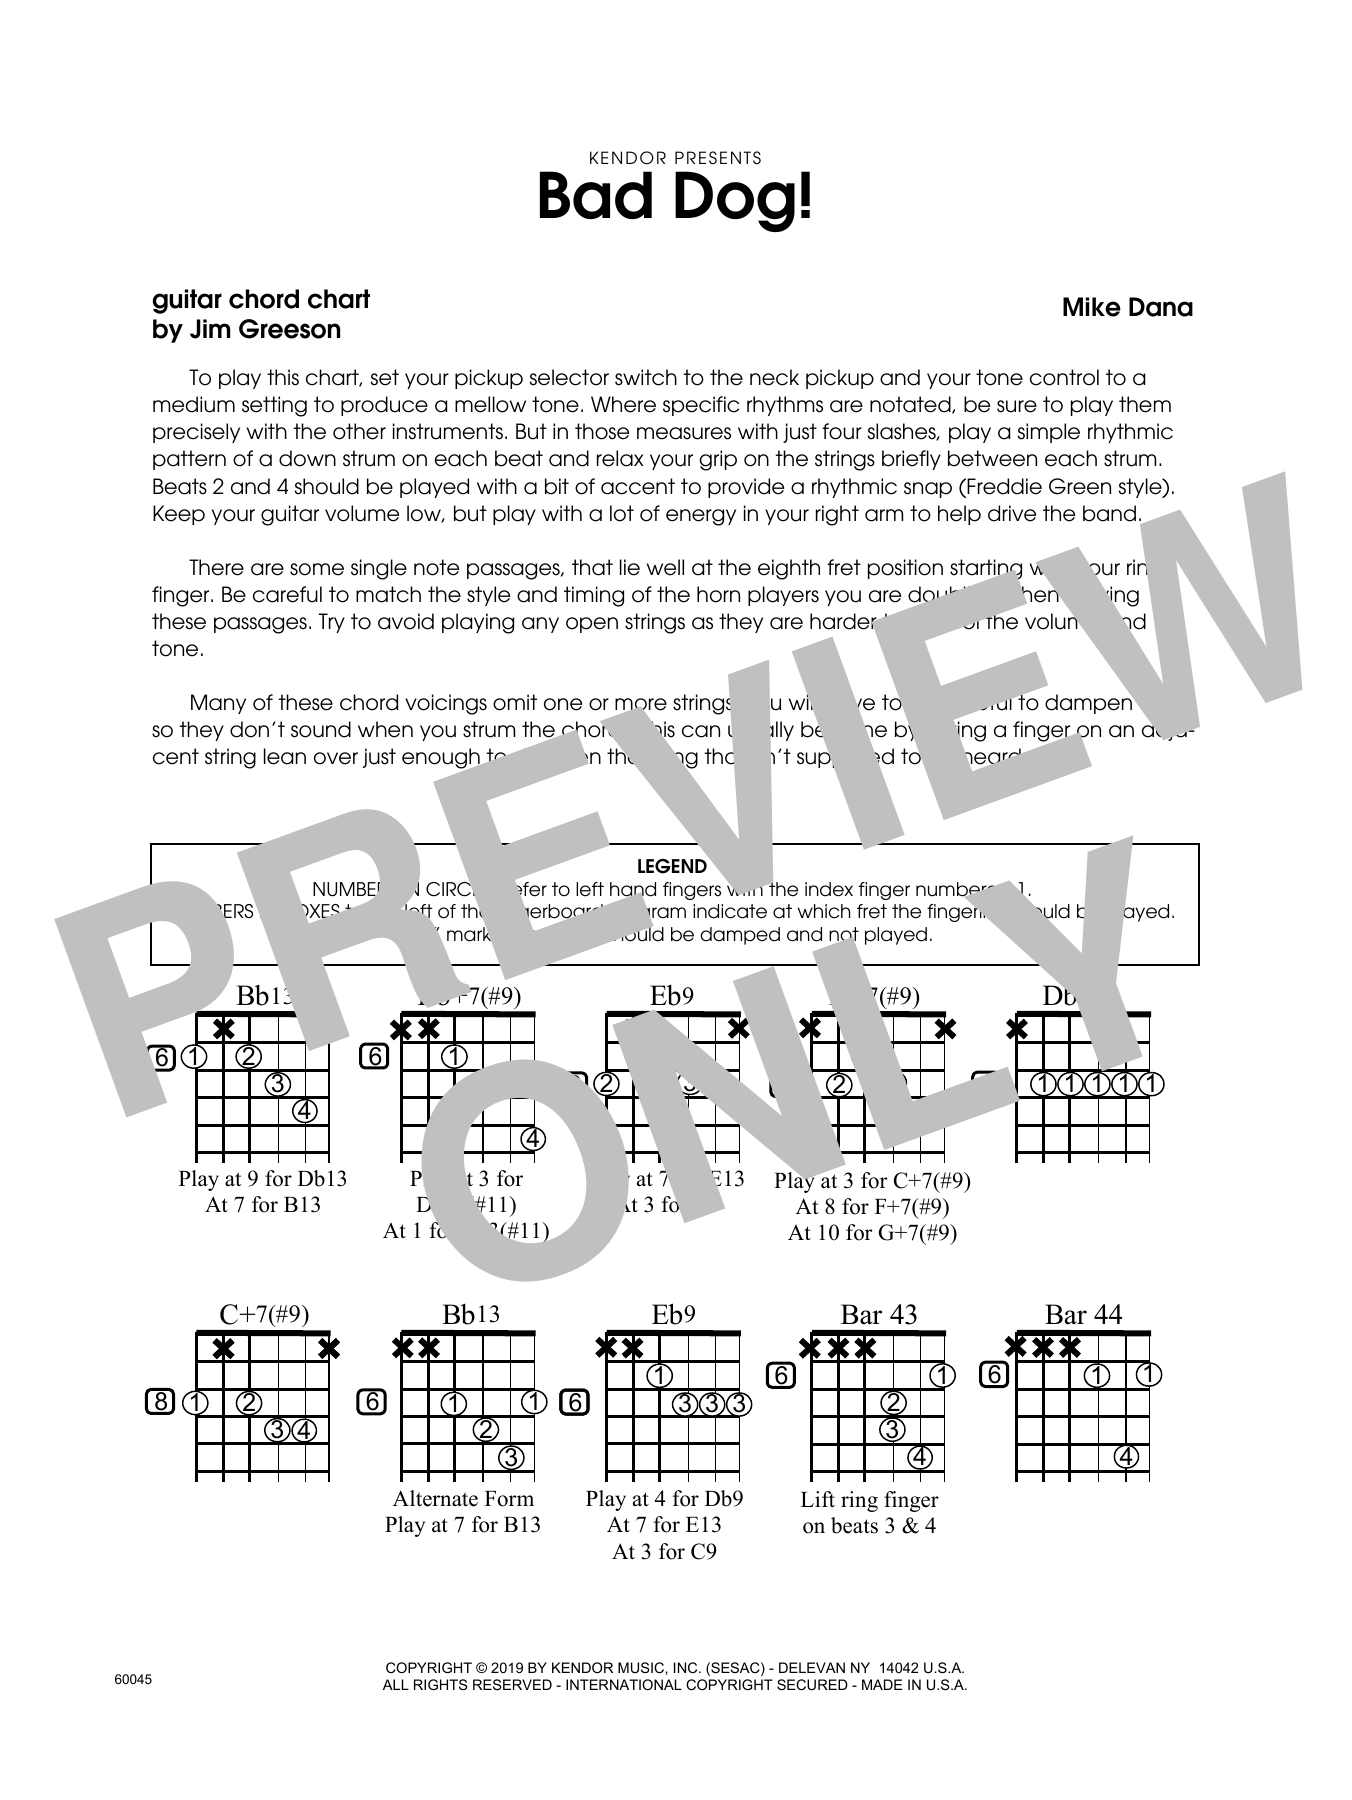 Download Mike Dana Bad Dog! - Guitar Chord Chart Sheet Music